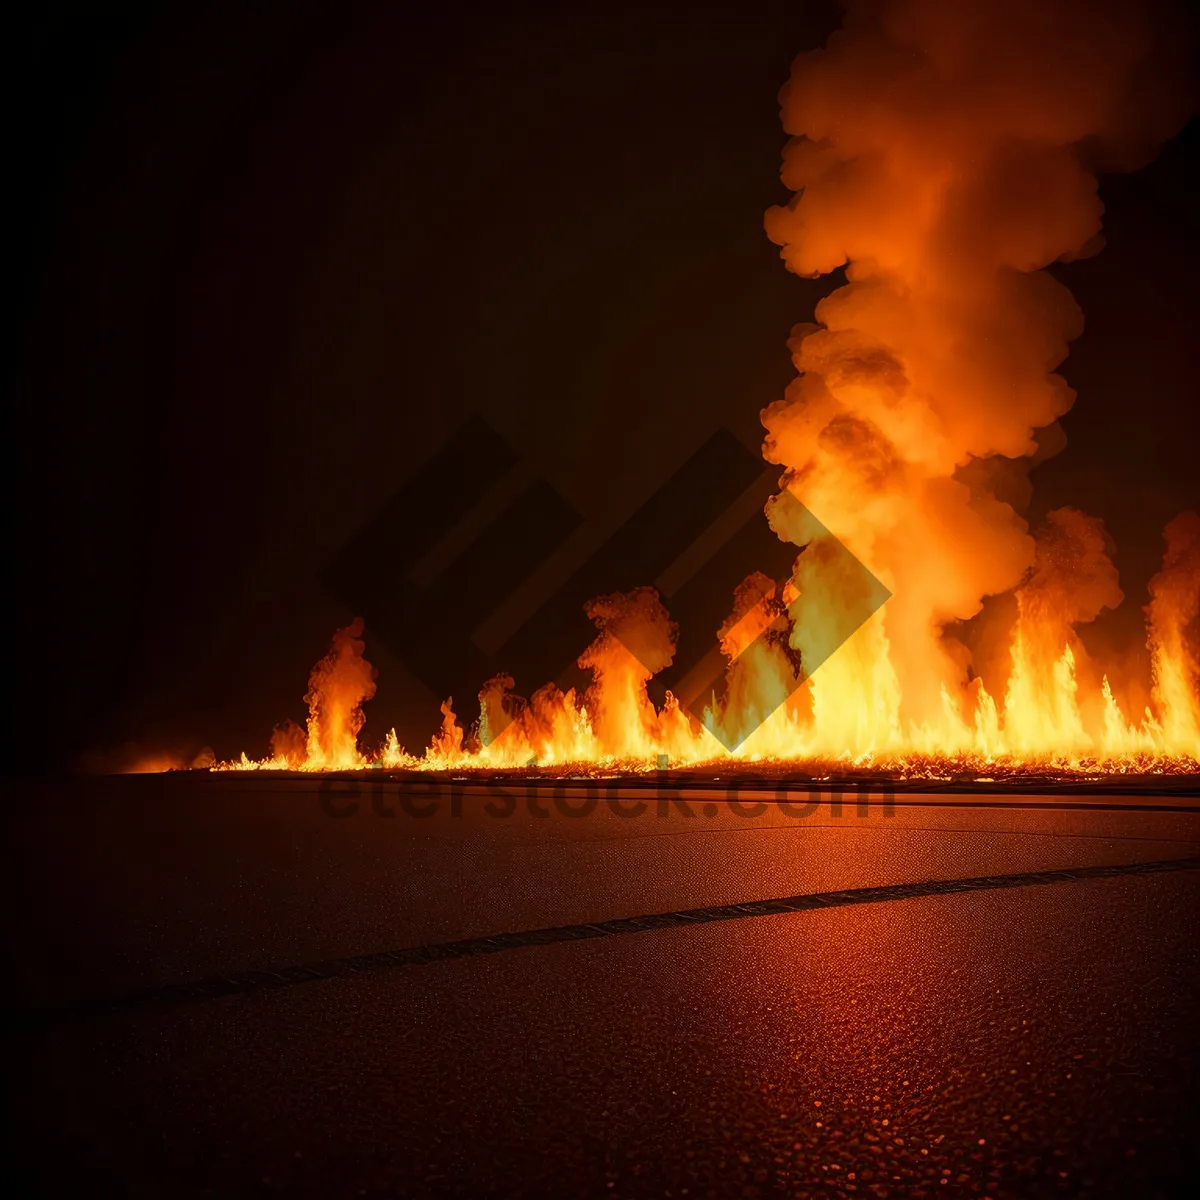 Picture of Blazing Fire: Intense Heat and Fiery Glow